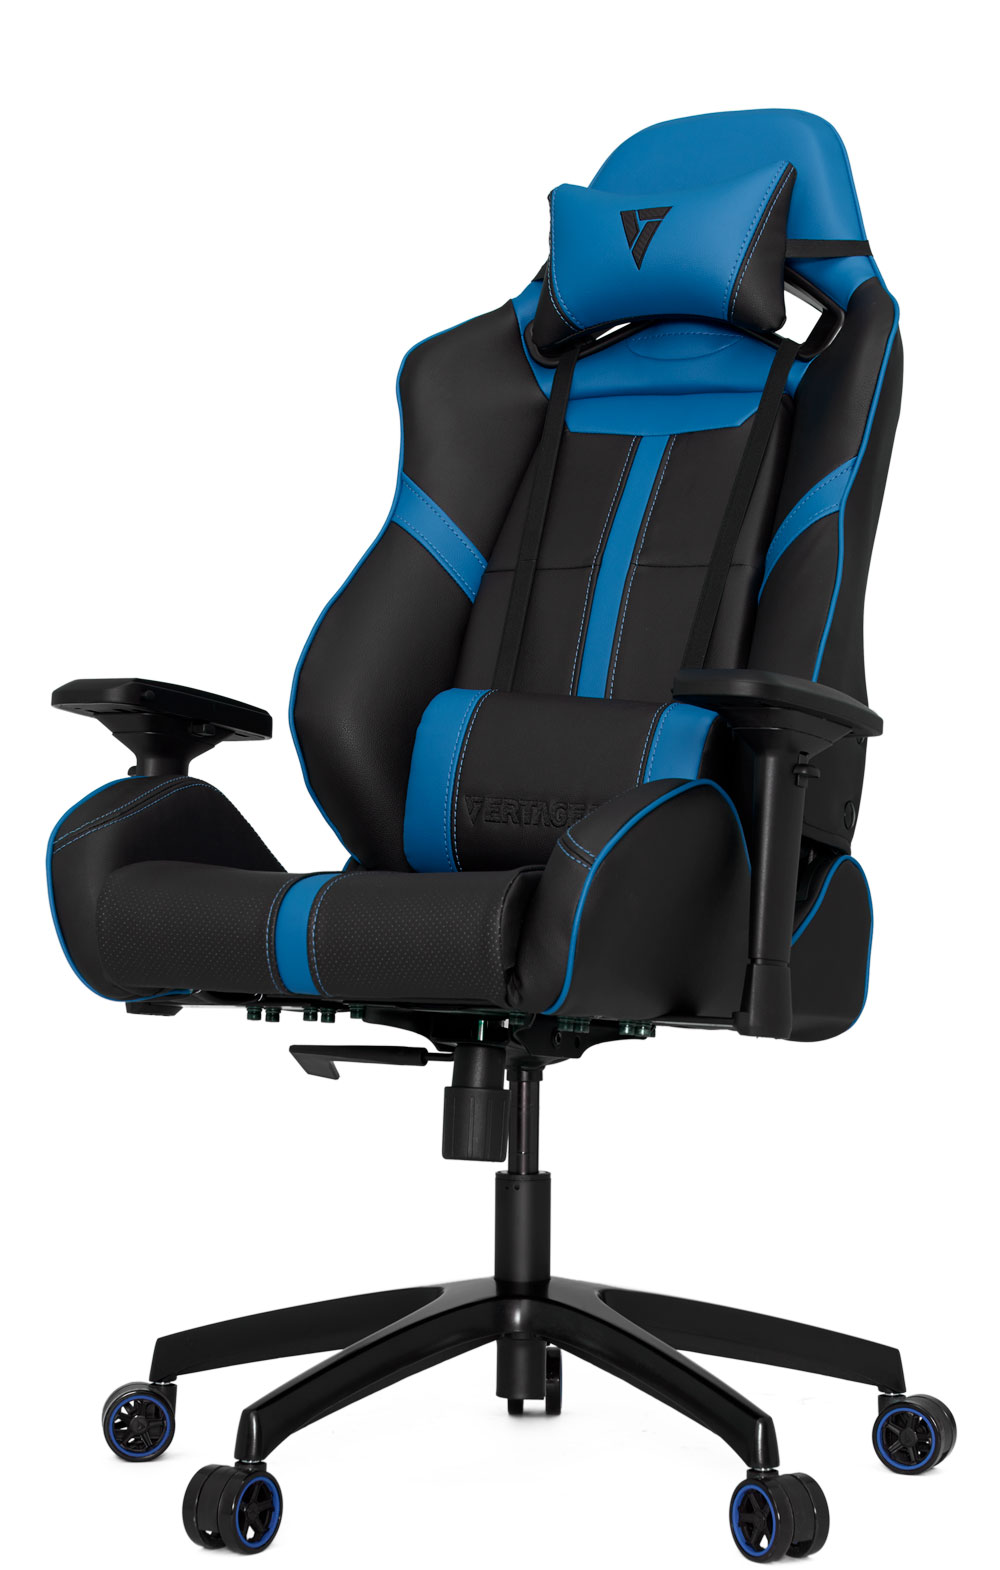 Vertagear SL5000 Gaming Chair Black / Blue